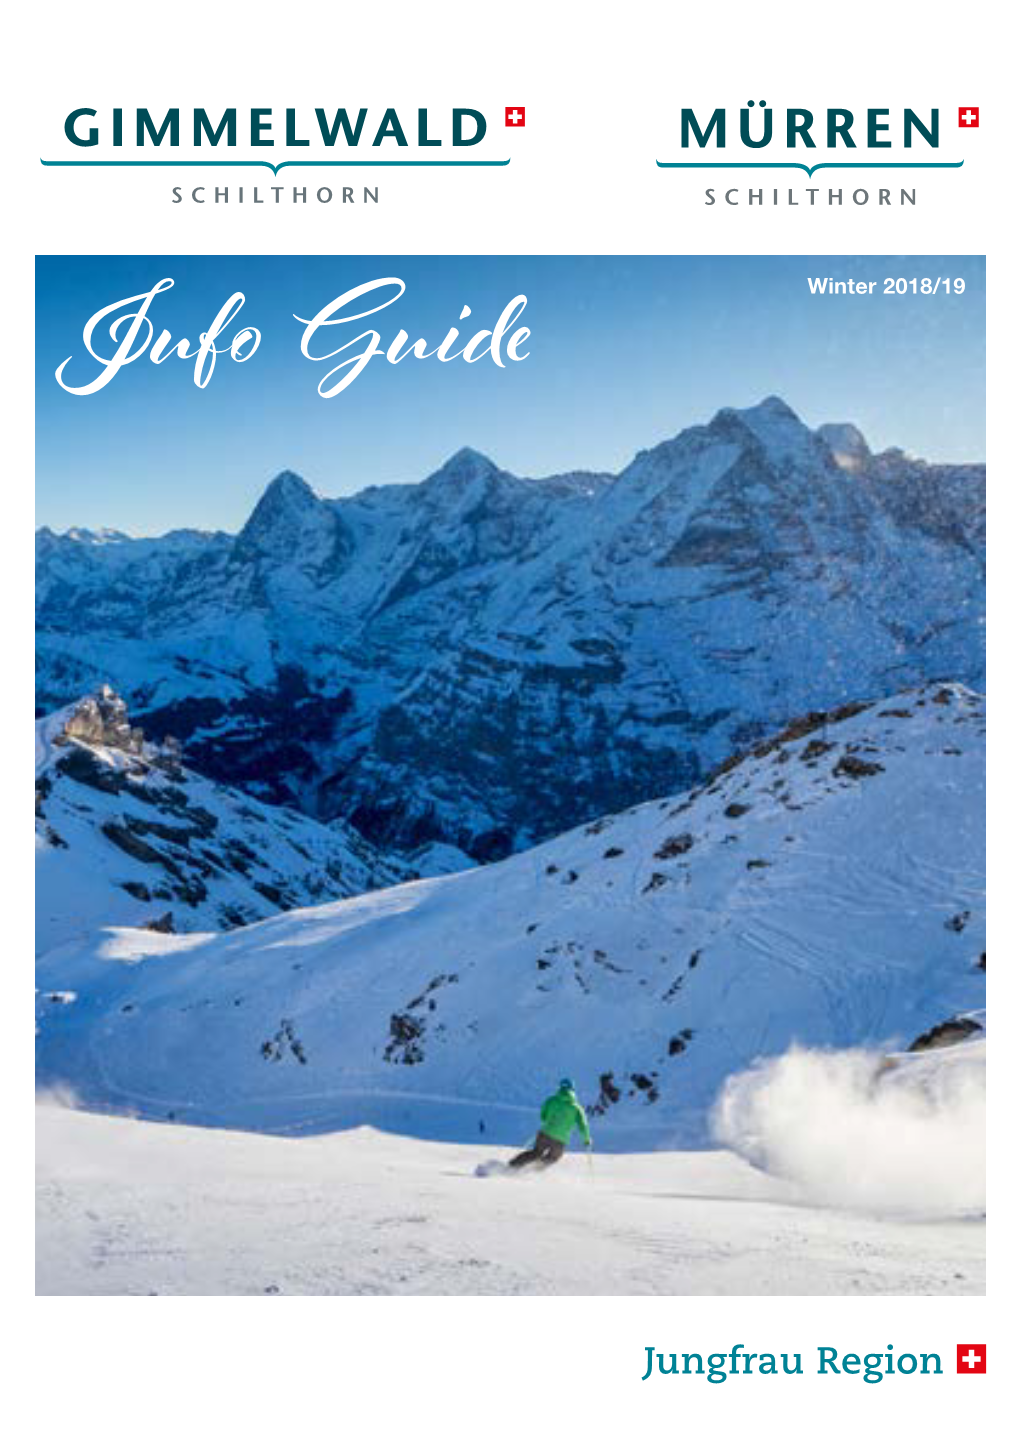 Iufo Guide Eiger Lounge | Eiger Stübli | Tächi Bar View | Atmosphere | Feeling